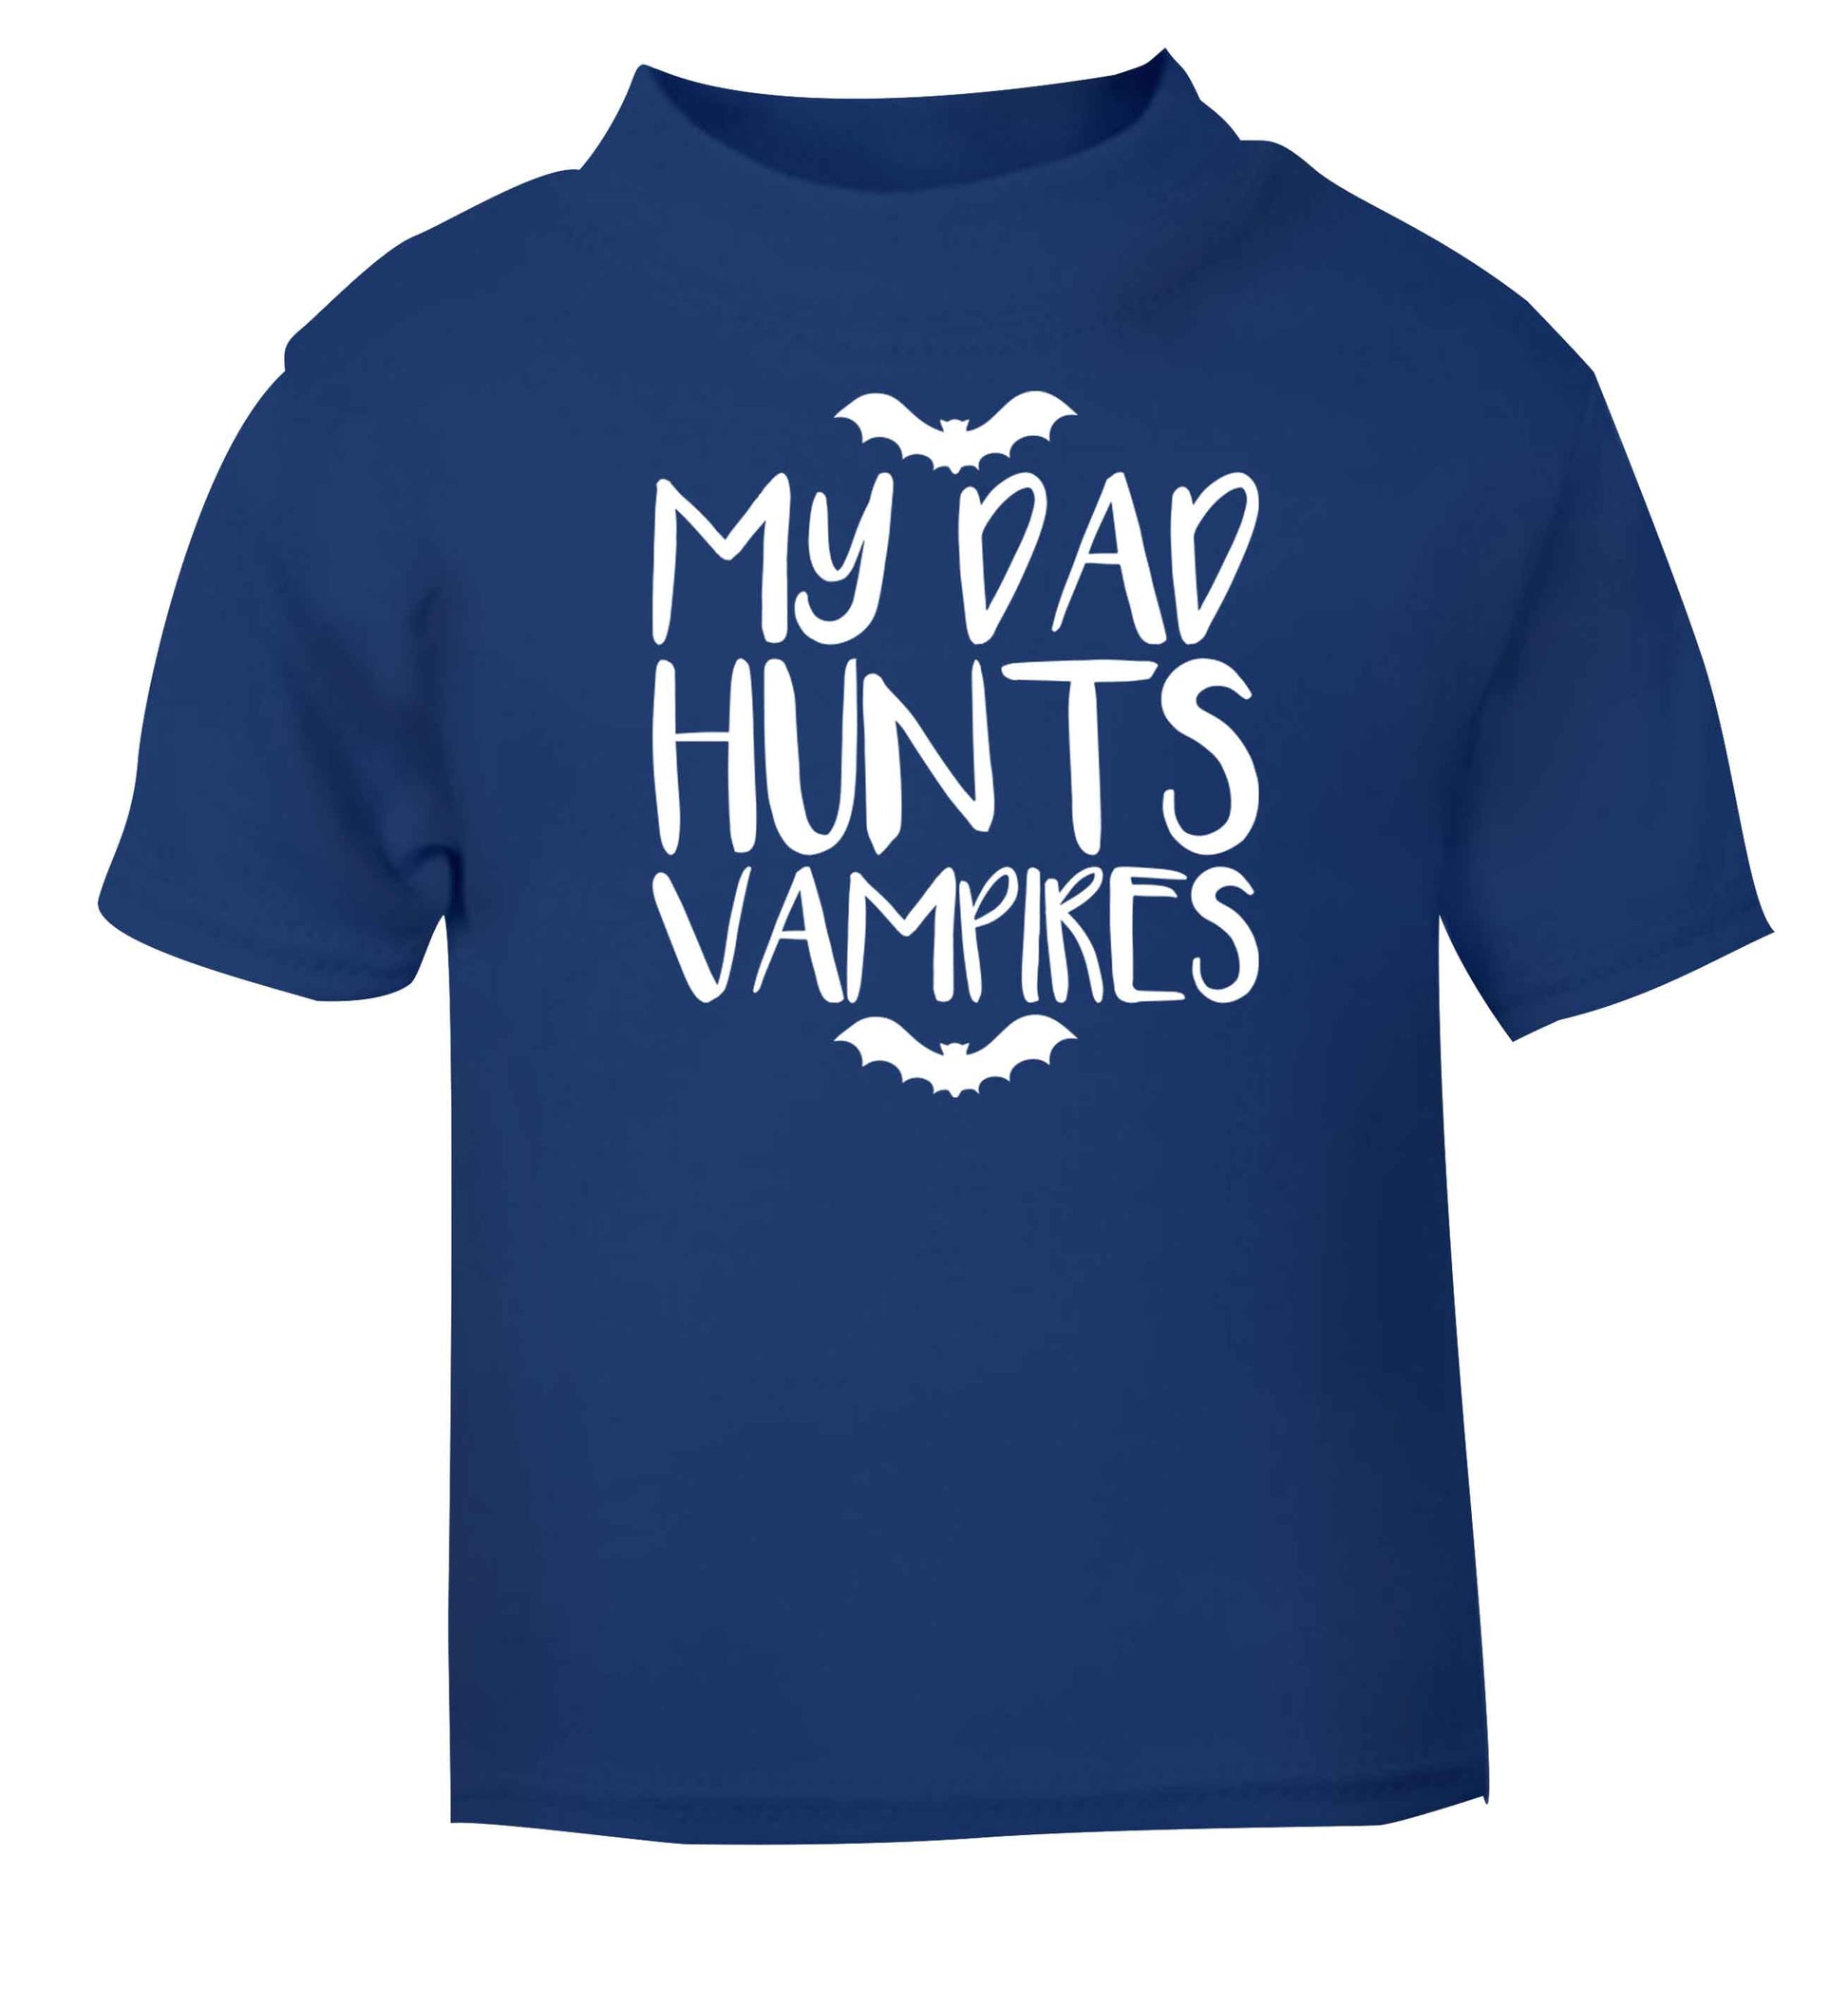 My dad hunts vampires blue baby toddler Tshirt 2 Years